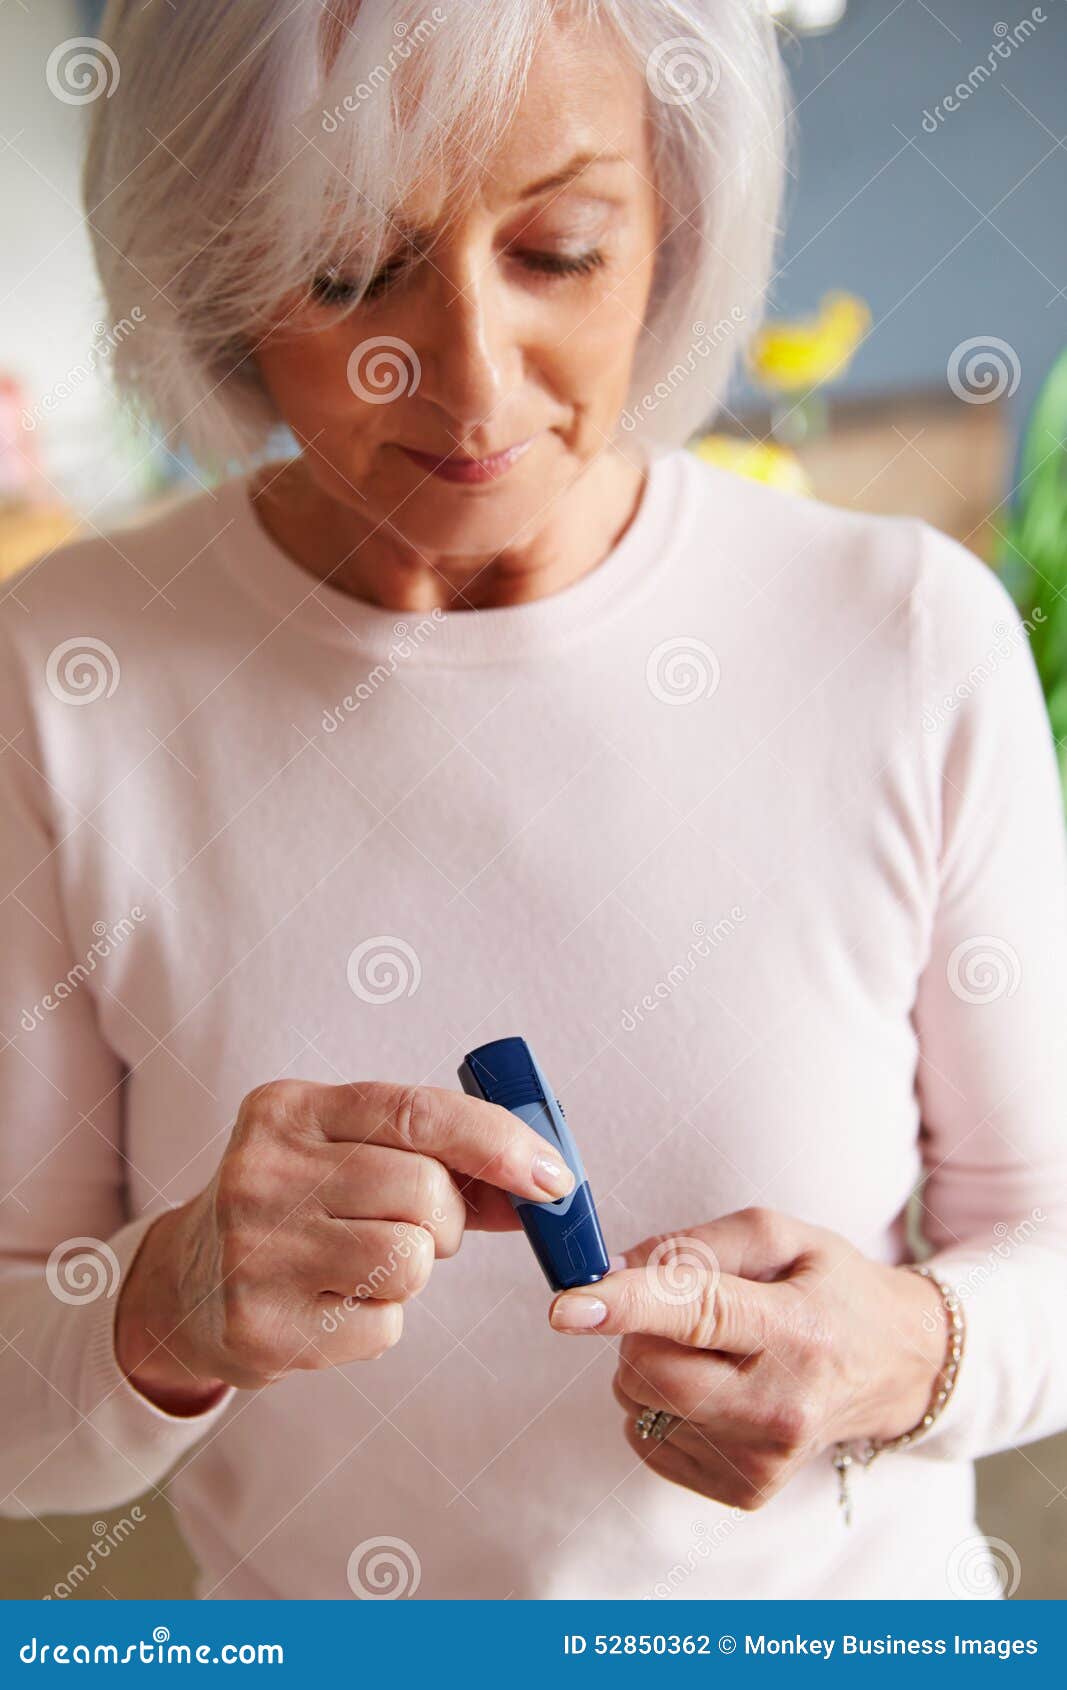 senior female diabetic checking blood sugar levels